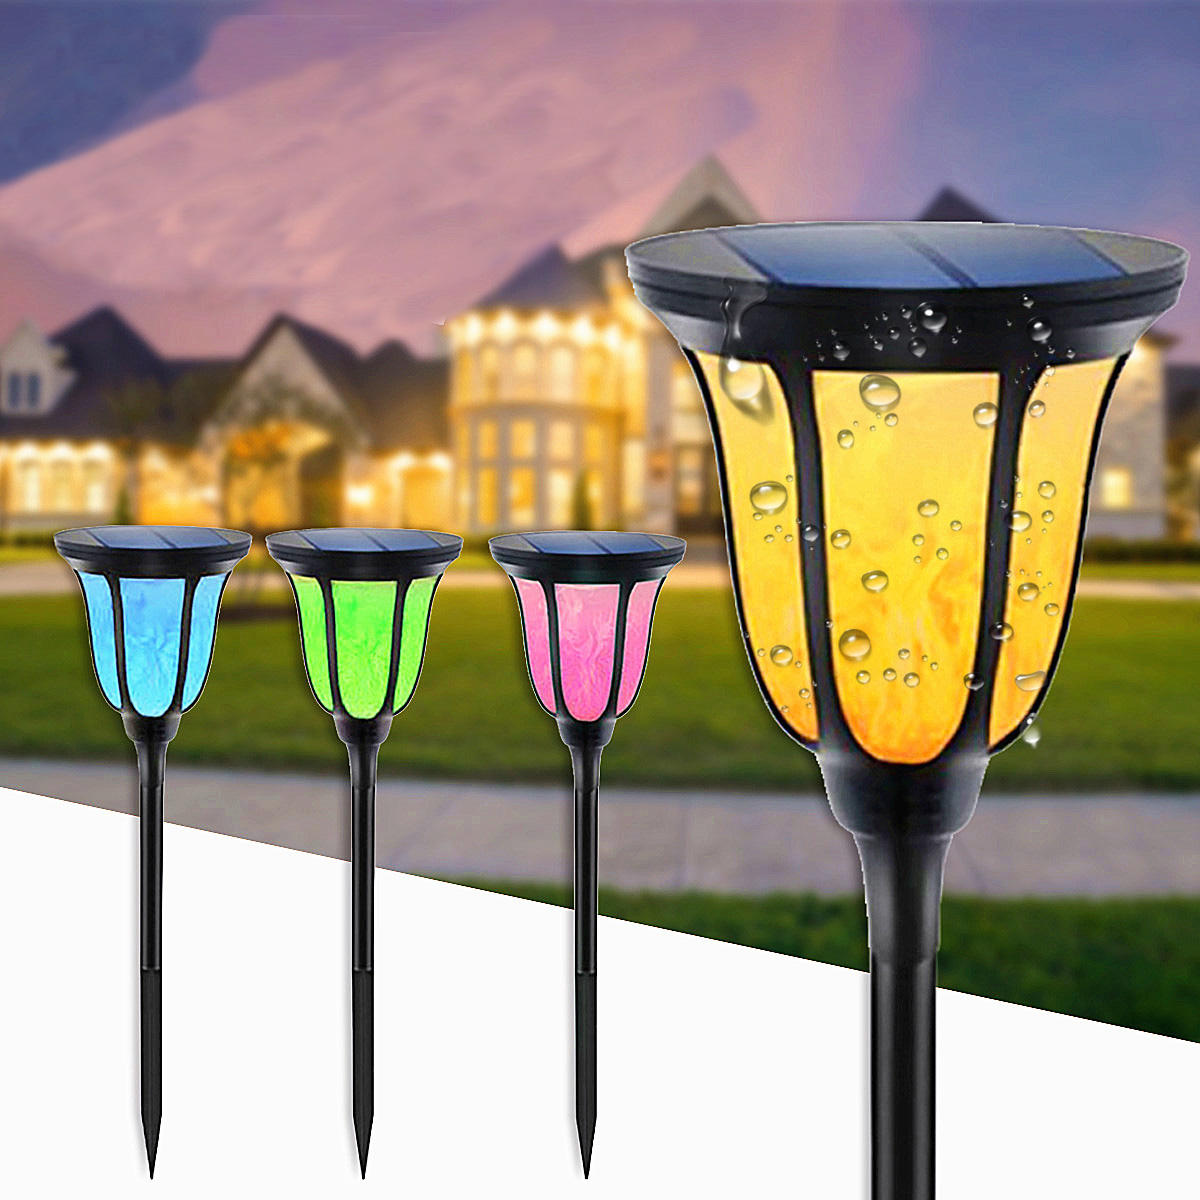 96 LED Solar Flame Light Waterproof Camping Garden Decor Lantern Flickering Lamp